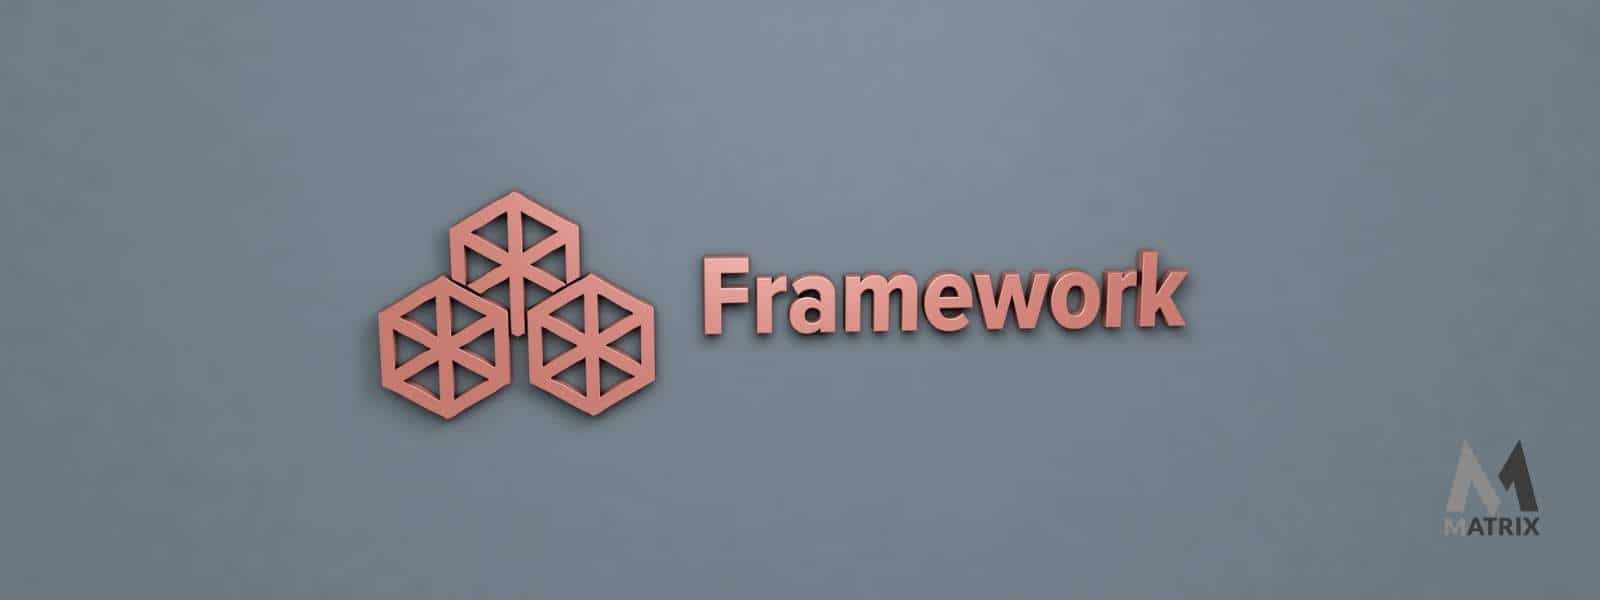 Brand messaging framework business services